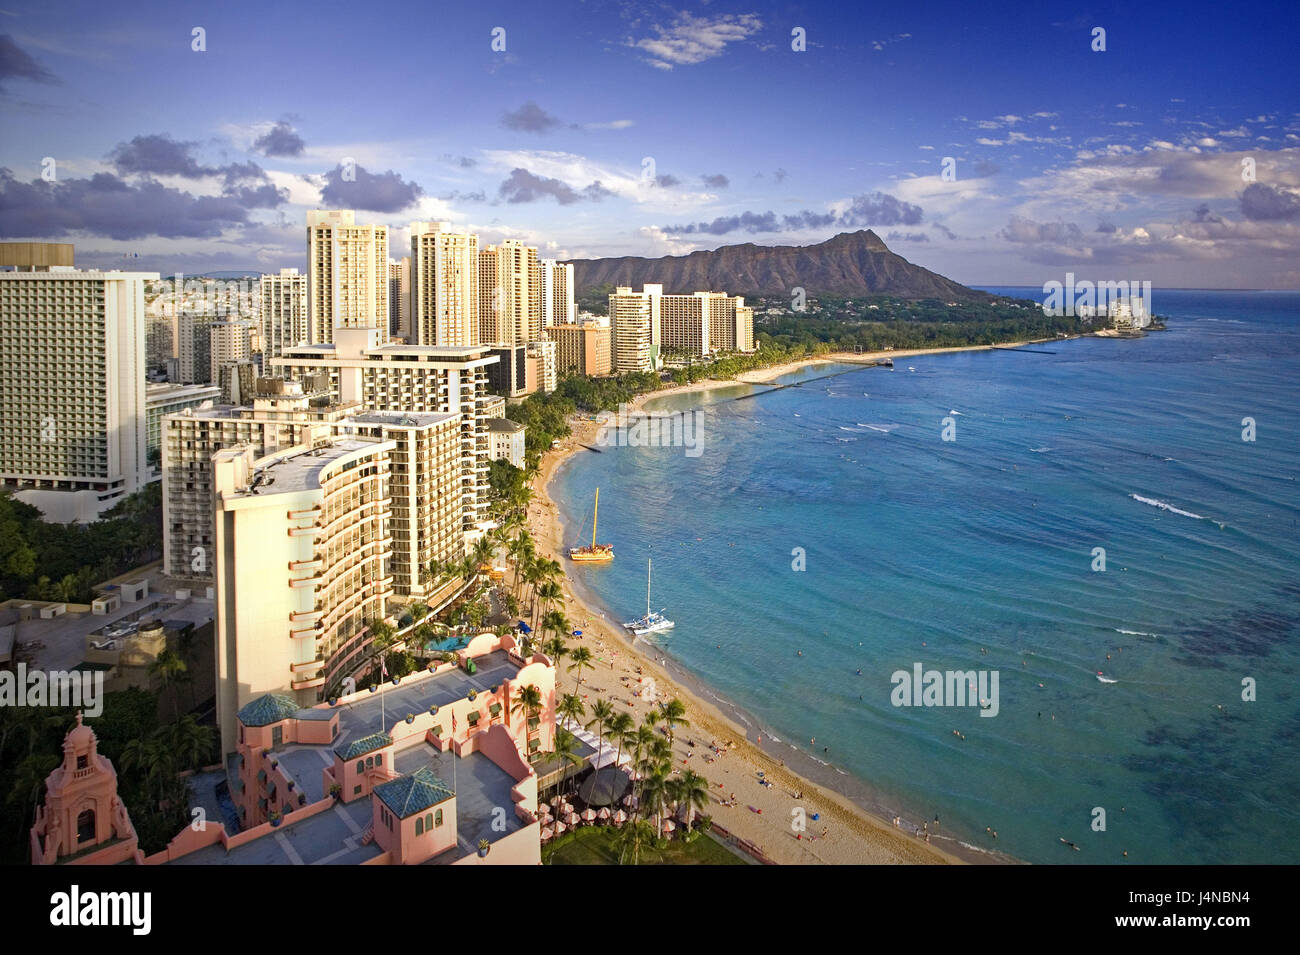 Gli Stati Uniti, Hawaii, Oahu Islanda, Honolulu e Waikiki Beach, spiaggia vista, le isole hawaiane, destinazione, turismo, alta sorge, hotel edifici, mare, spiaggia, mountain, sky, nuvole, acqua turchese, Foto Stock